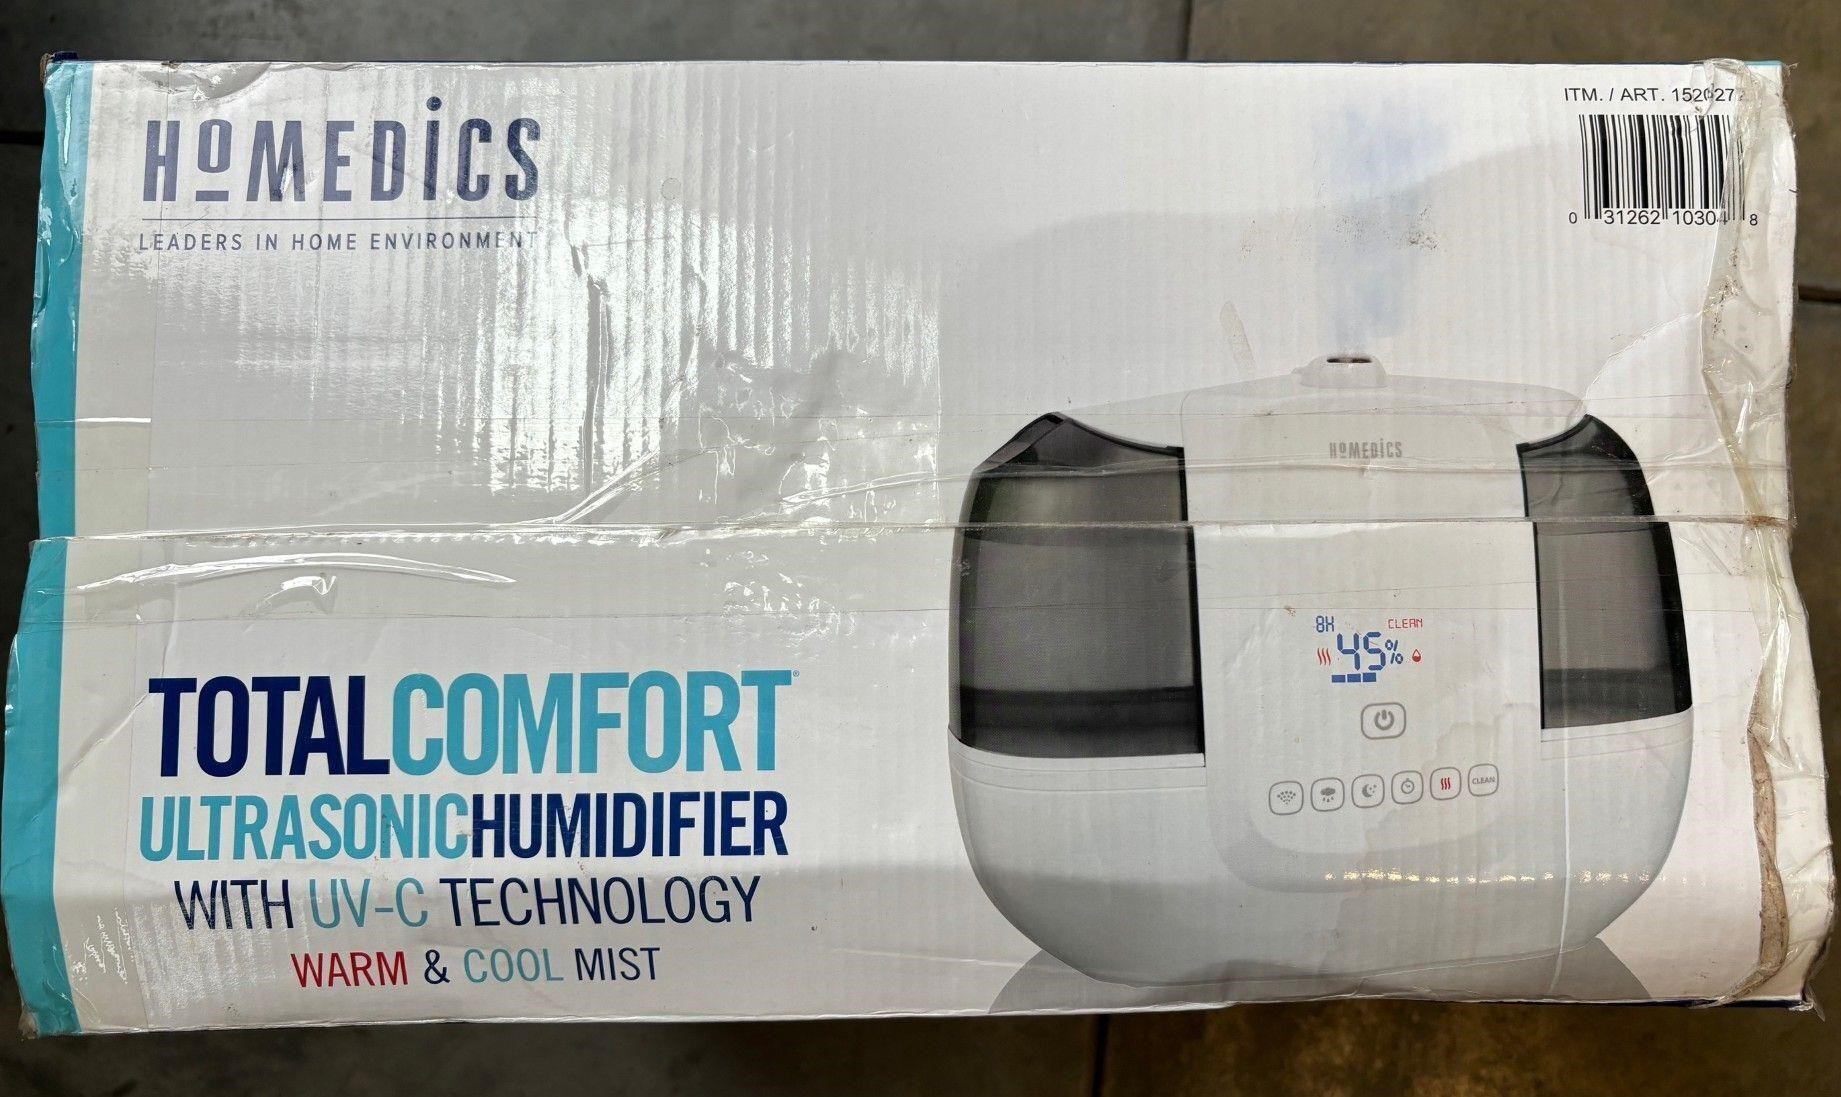 HoMedics TotalComfort Ultrasonic Humidifier